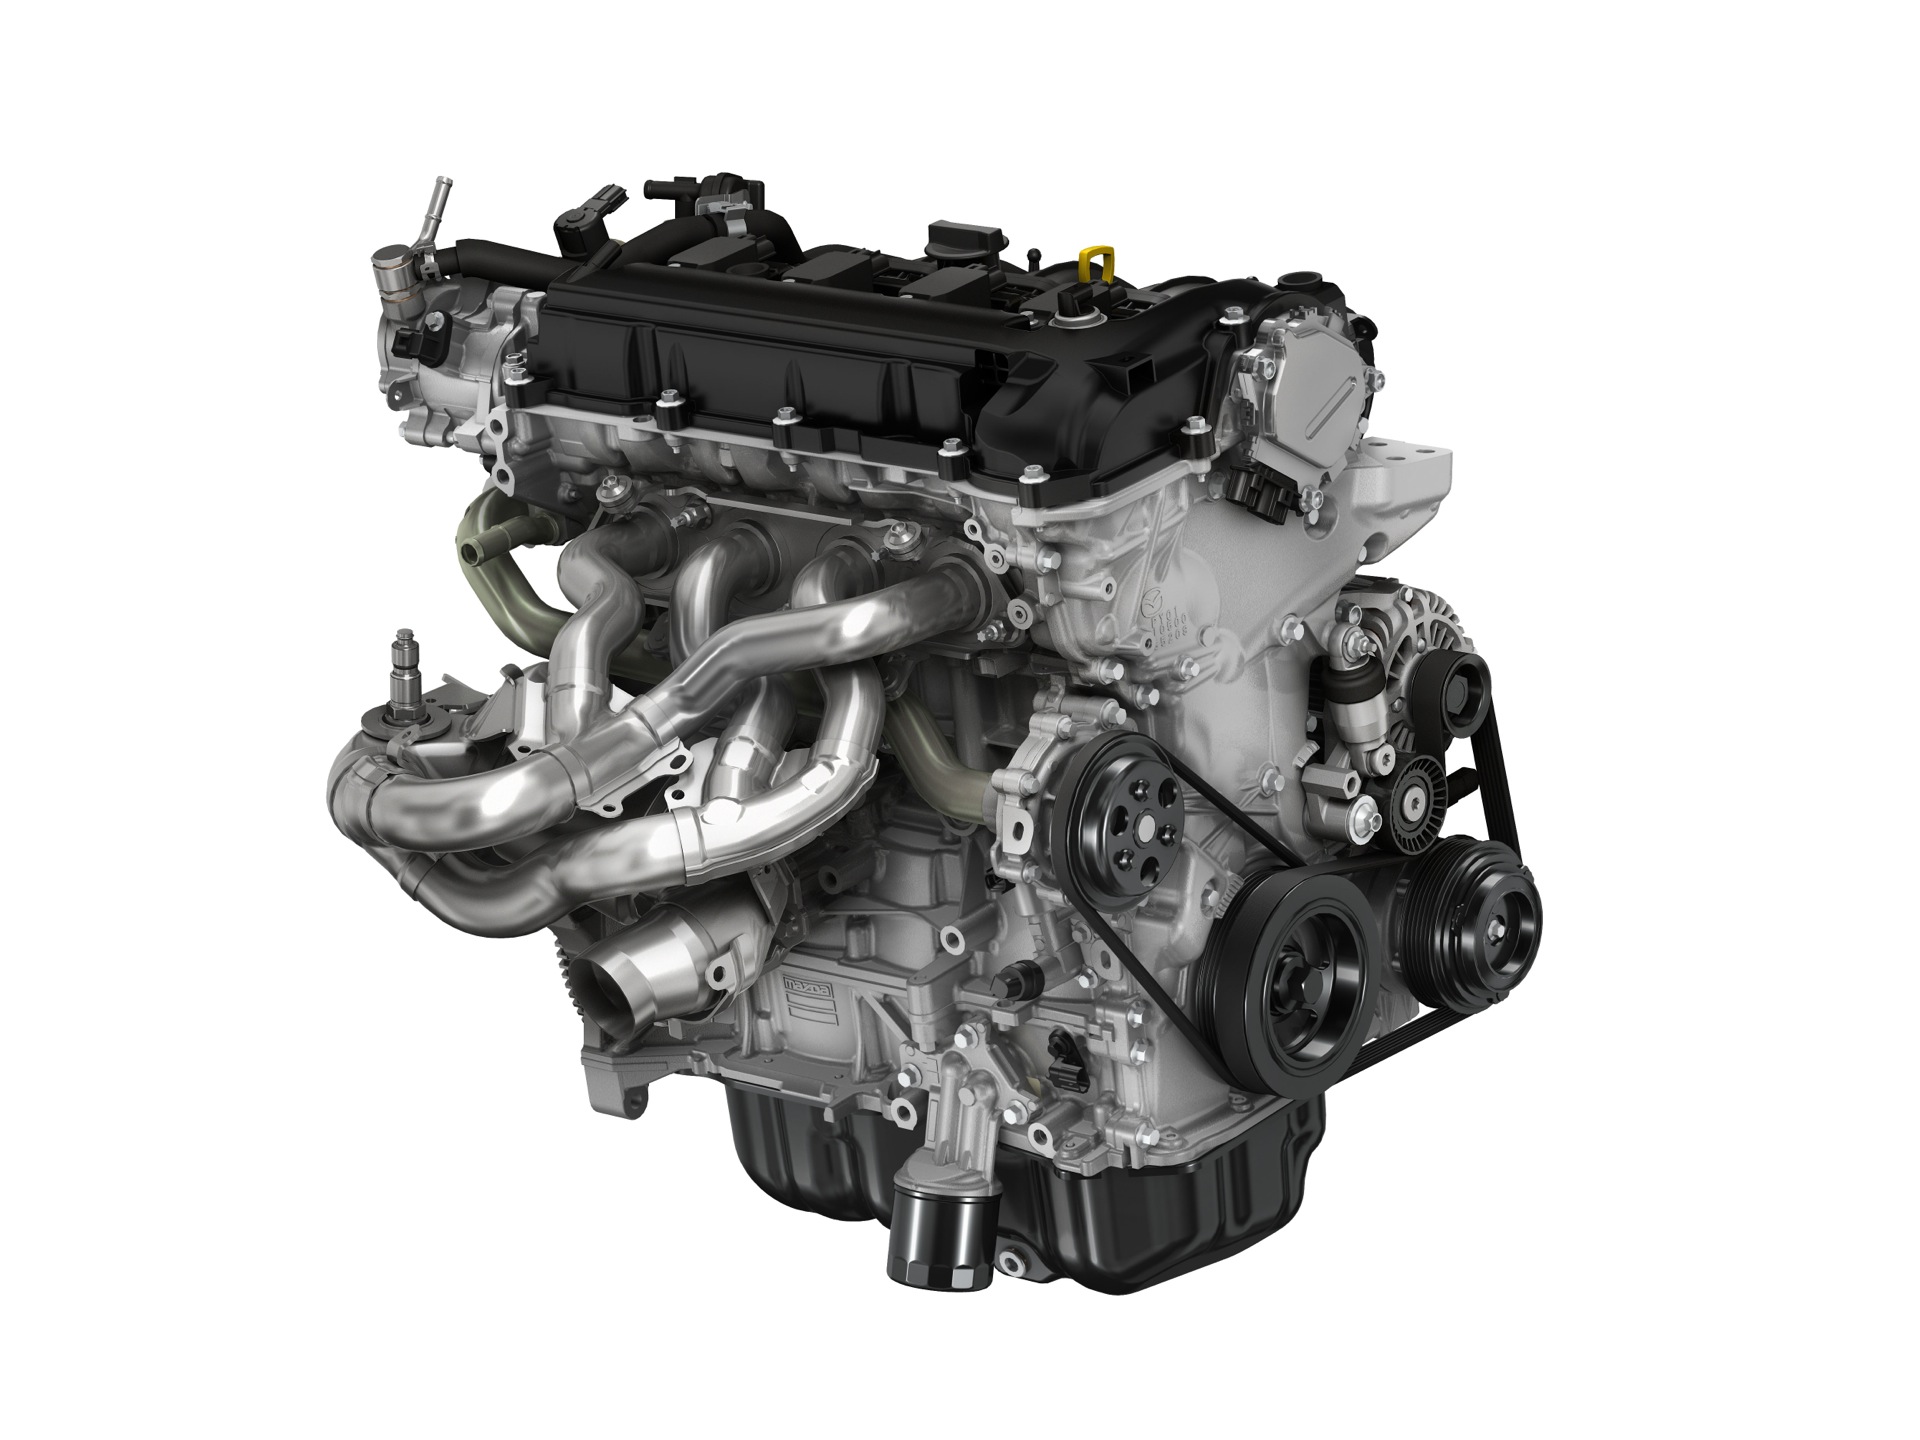 Mazda gj 2.5. Mazda 6 2.5 мотор. Мотор Мазда 6 2.5 скайактив. Двигатель g6 Мазда. Двигатель Мазда 2.5 турбо.